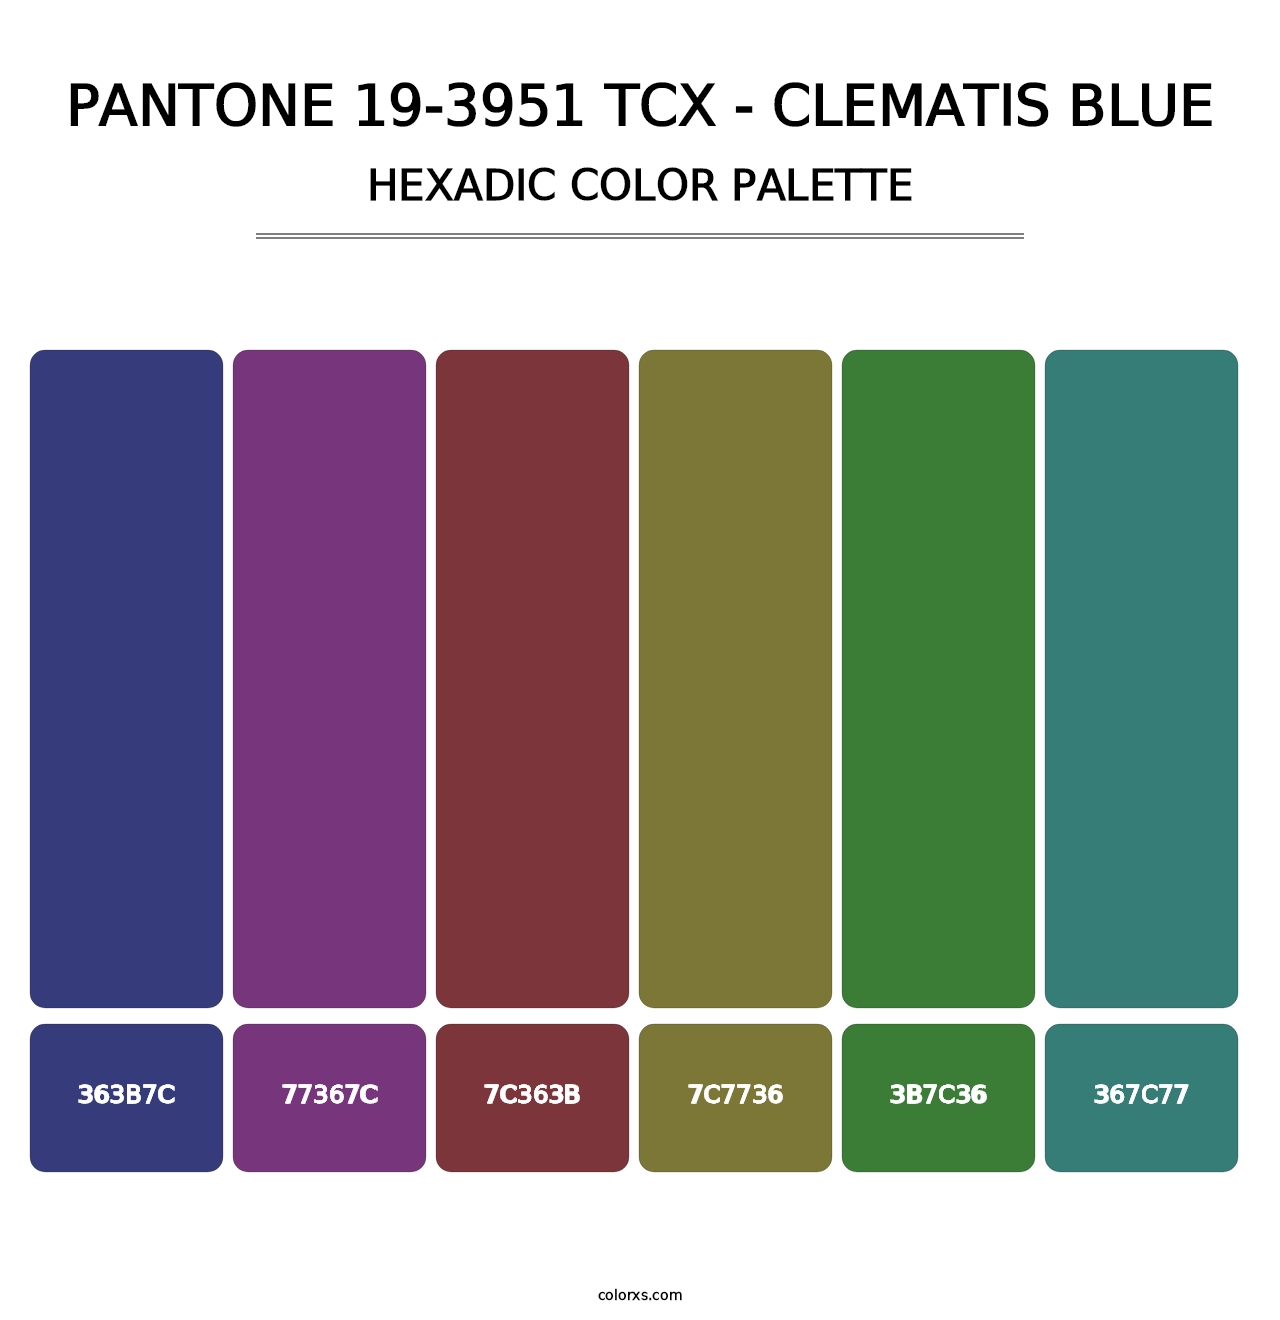 PANTONE 19-3951 TCX - Clematis Blue - Hexadic Color Palette